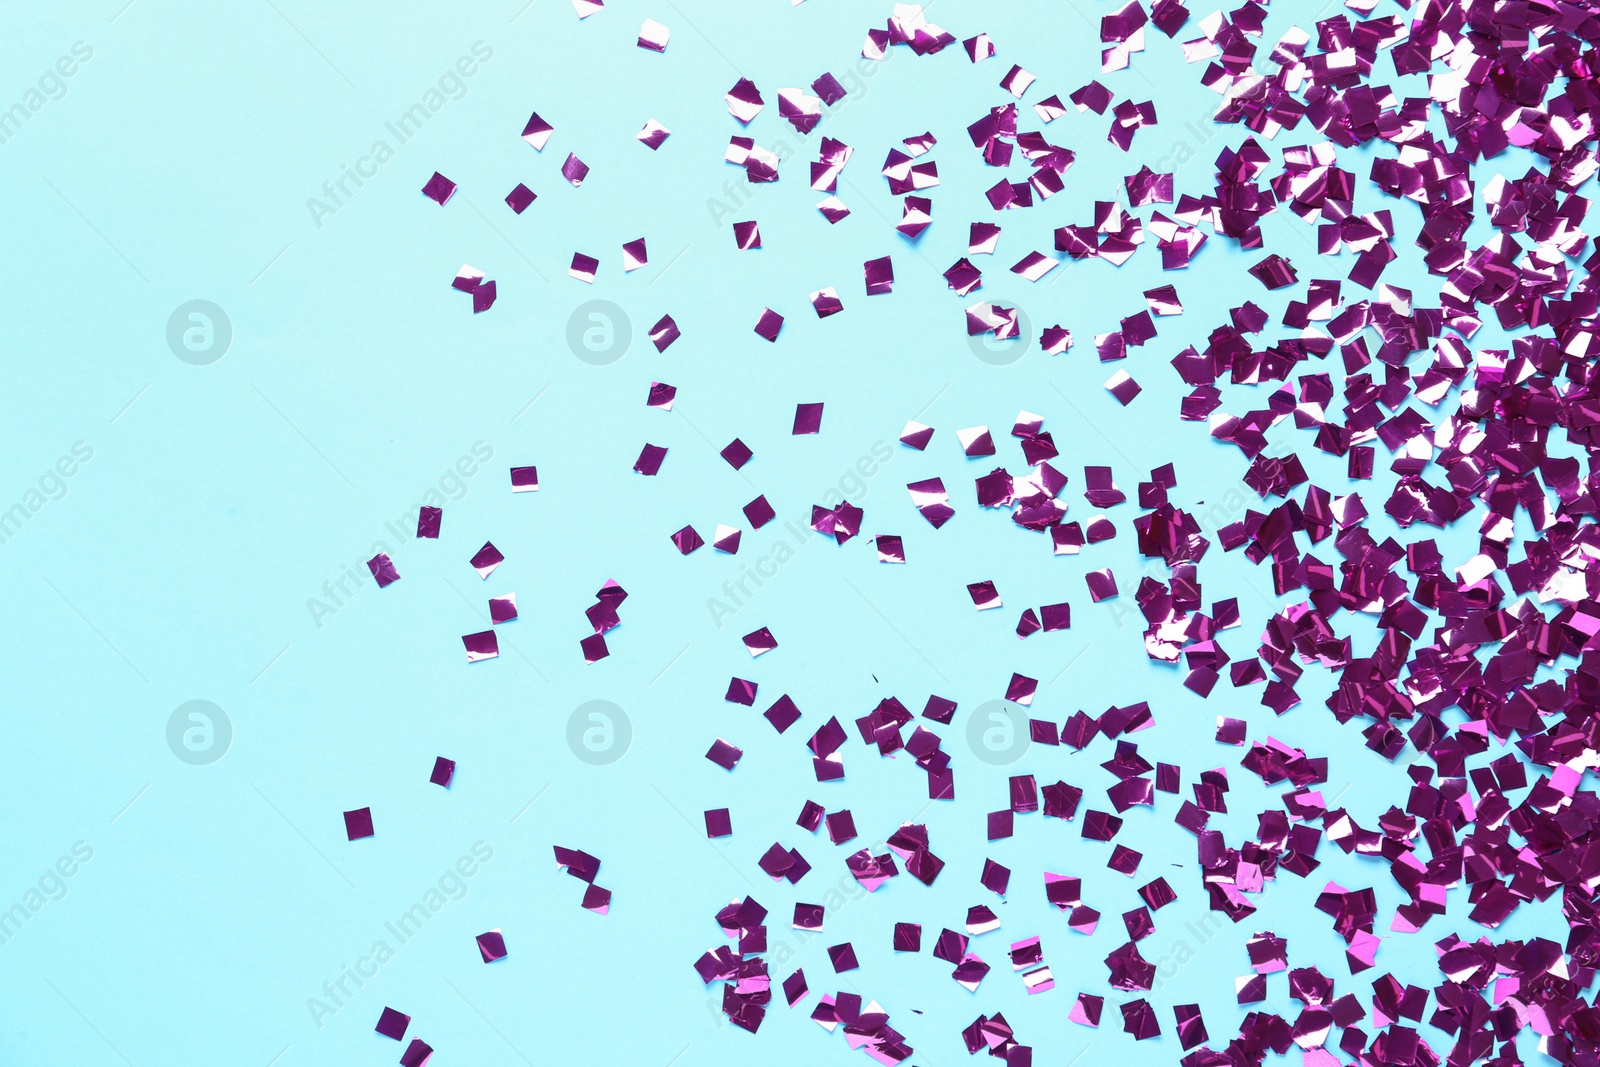 Photo of Shiny purple confetti on light blue background, flat lay